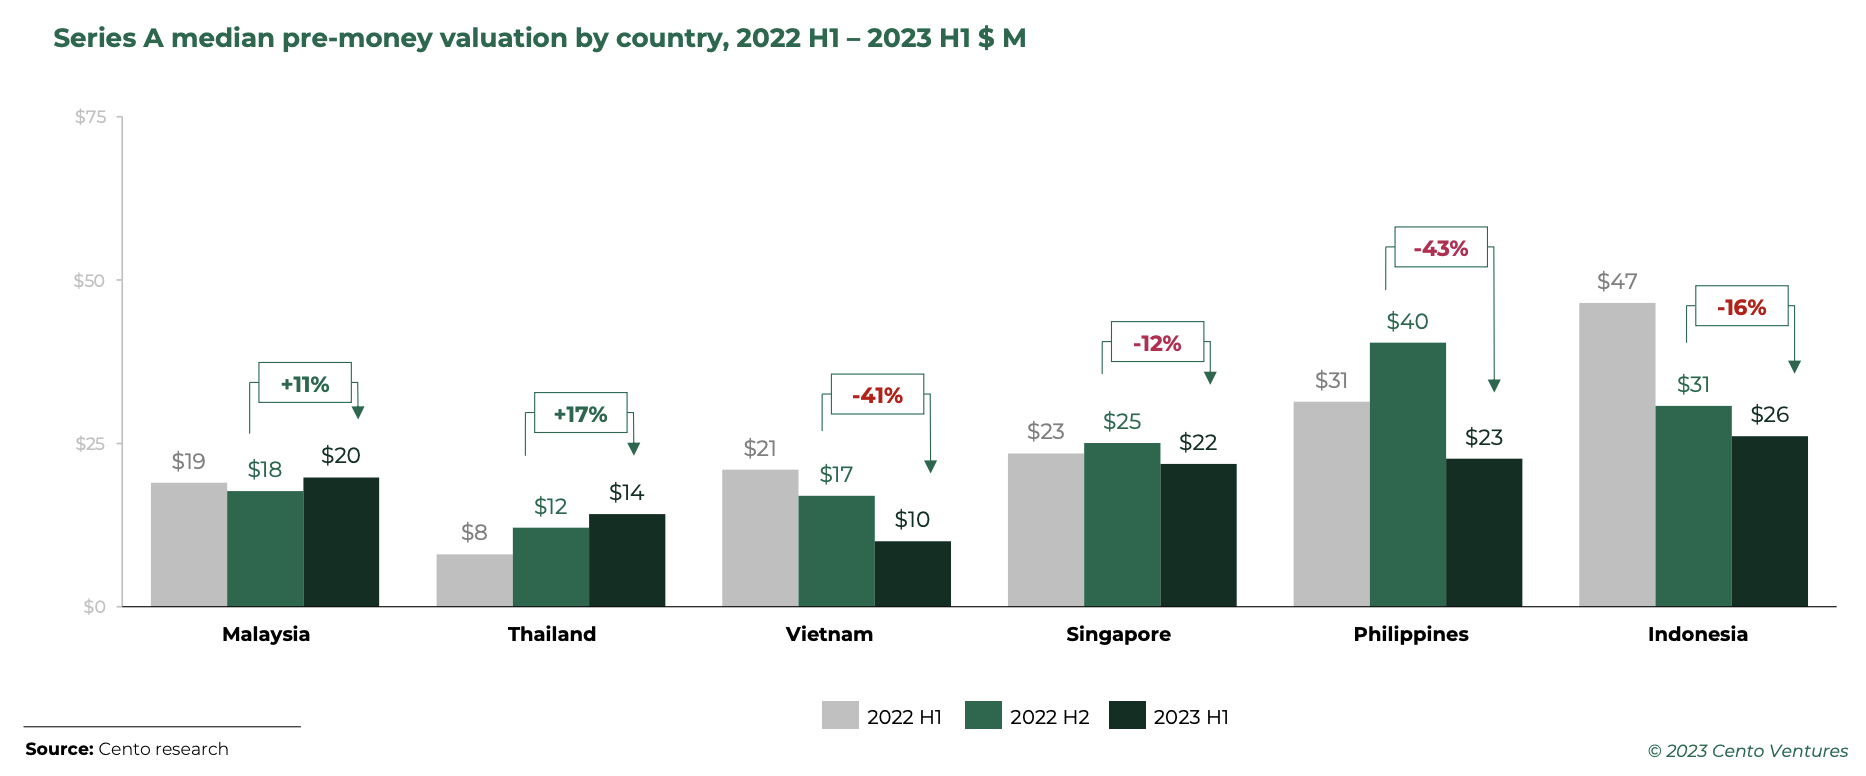 Penilaian median uang muka Seri A menurut negara, Semester 2022 1 – Semester 2023 1 US$ juta, Sumber: Southeast Asia Tech Investment 2023 H1, Cento Ventures, Des 2023